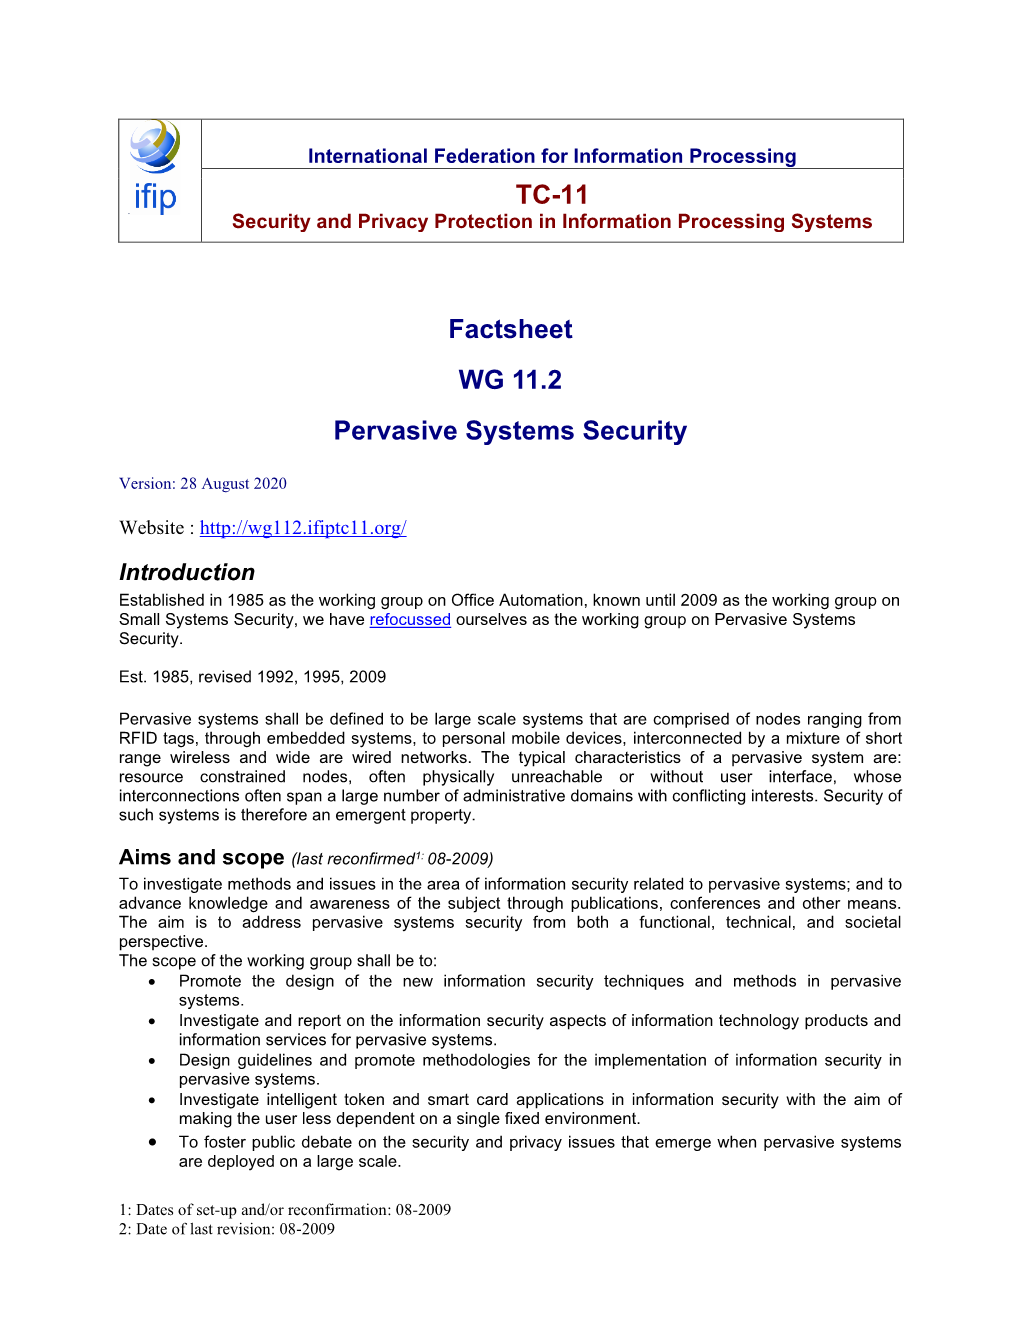 TC-11 Factsheet WG 11.2 Pervasive Systems Security